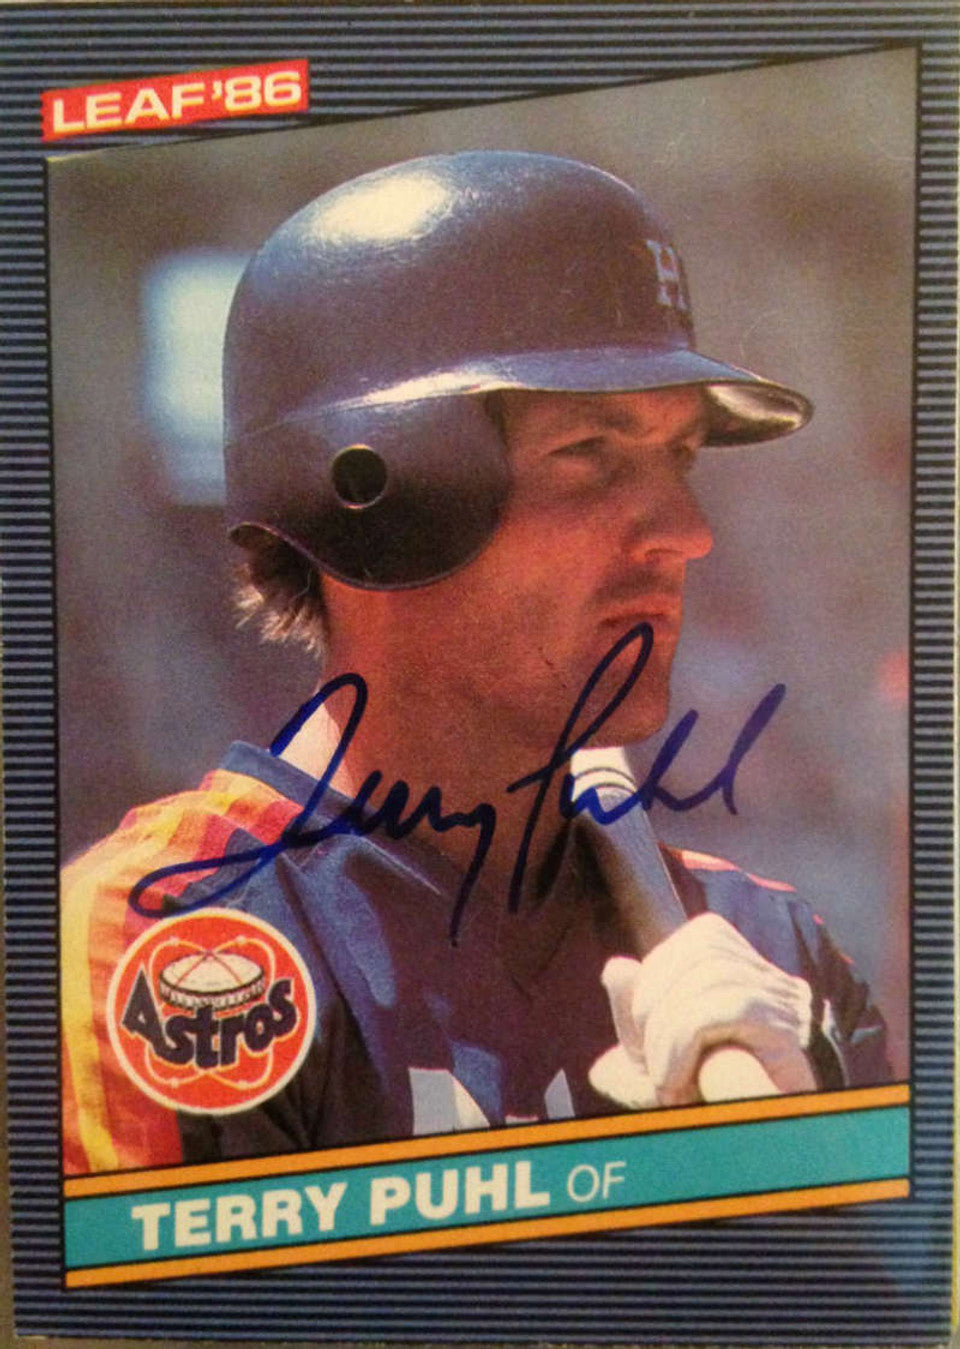 Terry Puhl Signed 1986 Leaf Baseball Card - Houston Astros